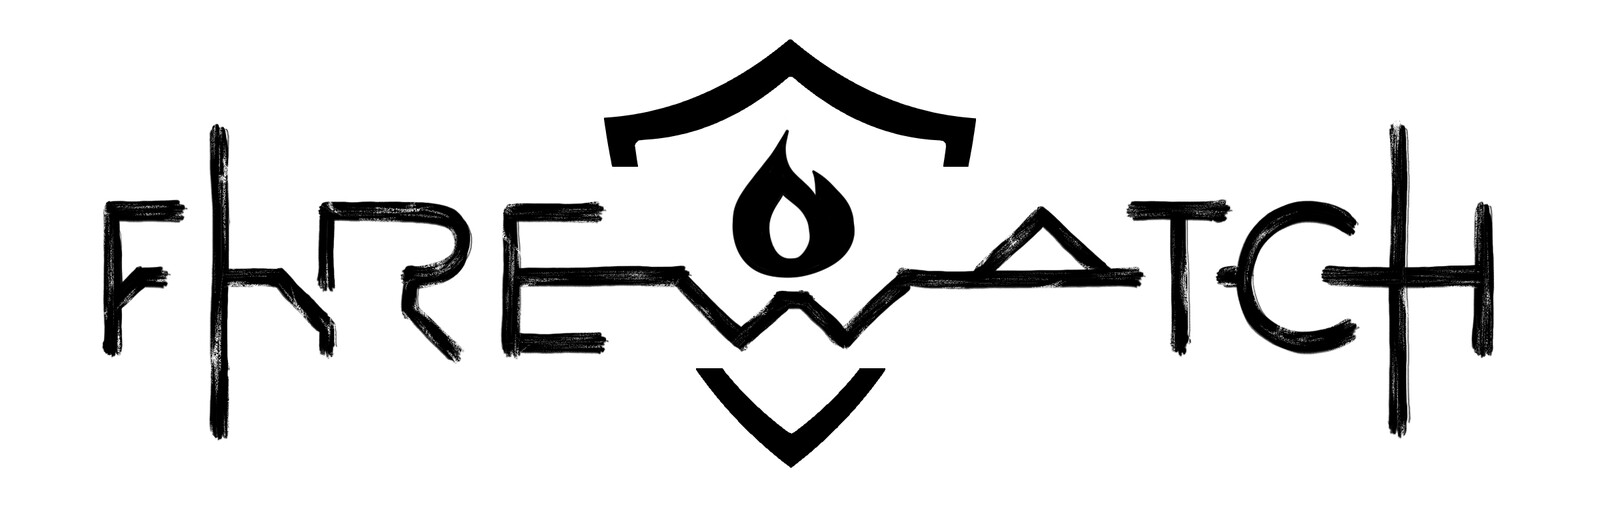 Firewatch Zero Dawn - logo concept
Digital 2D, october 2019